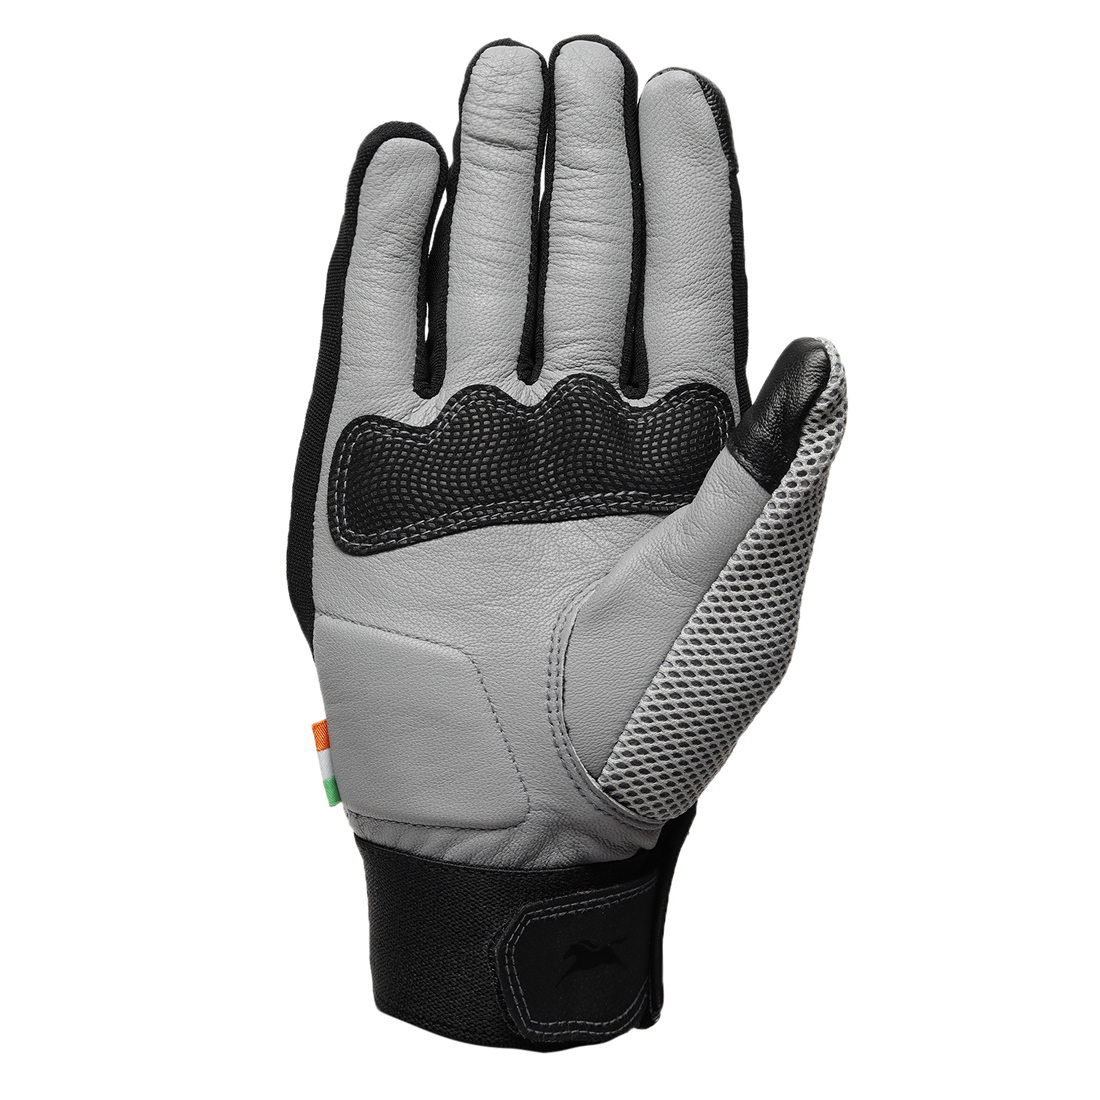  TVS Racing Xplorer Riding Gloves for Men – PVC & Carbon Protected, Touch Screen Compatible, & Visor Wiper Fingertips – Premium Bike Gloves for Riding Comfort (Grey)